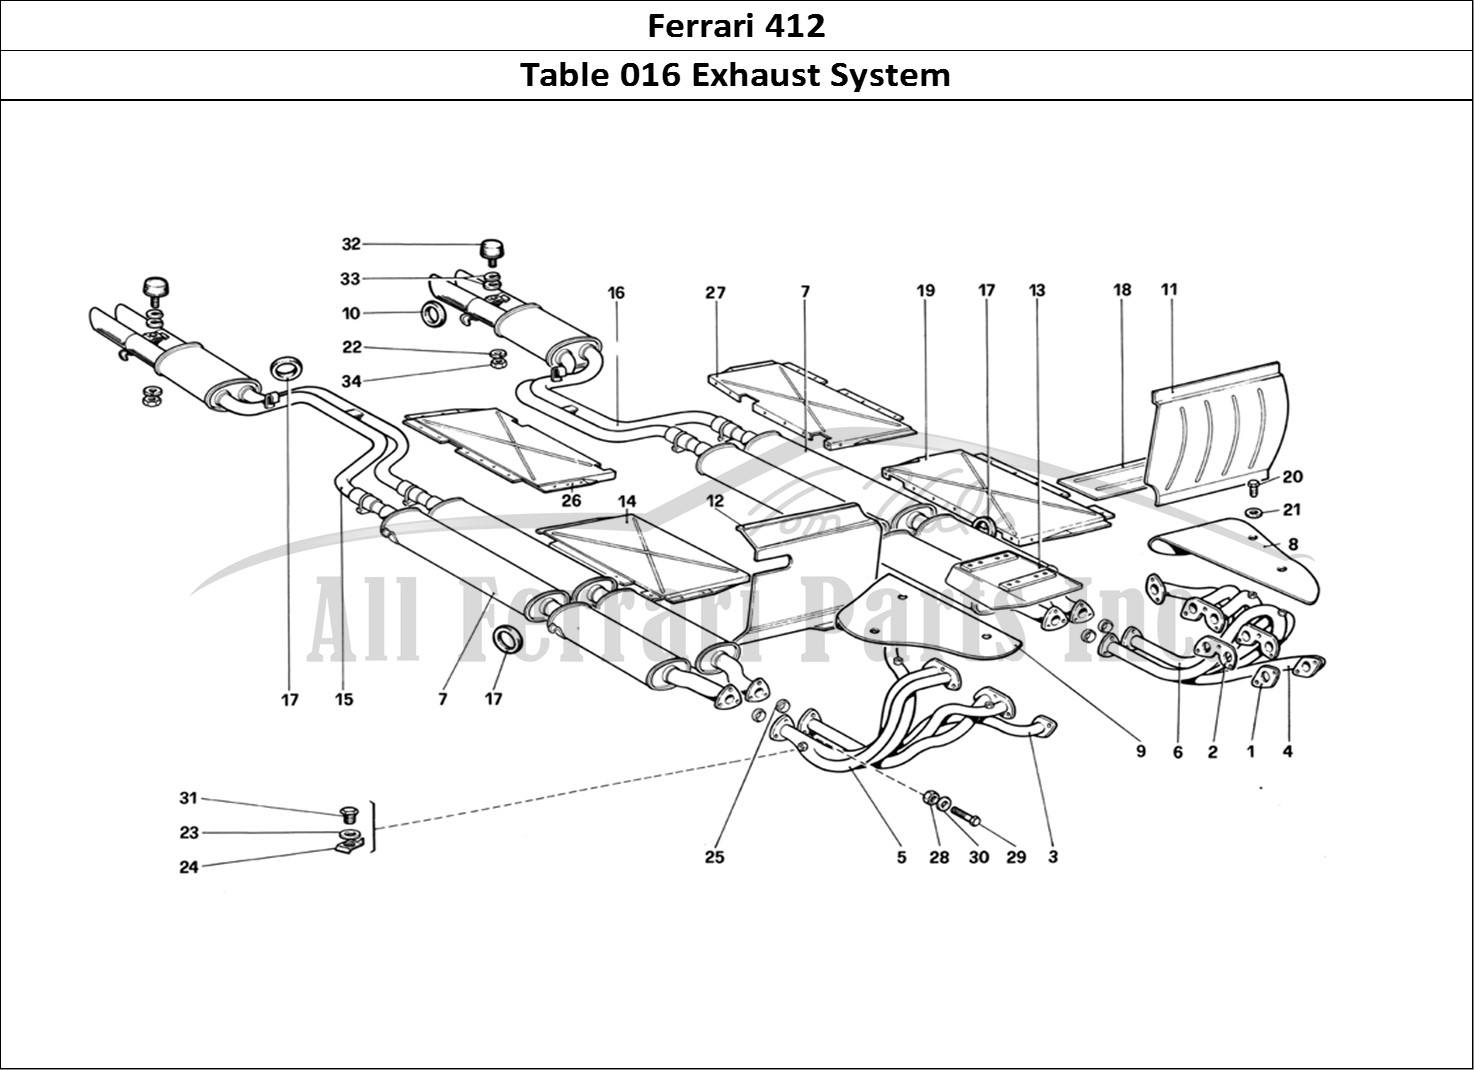 Ferrari Parts Ferrari 412 (Mechanical) Page 016 Exhaust System